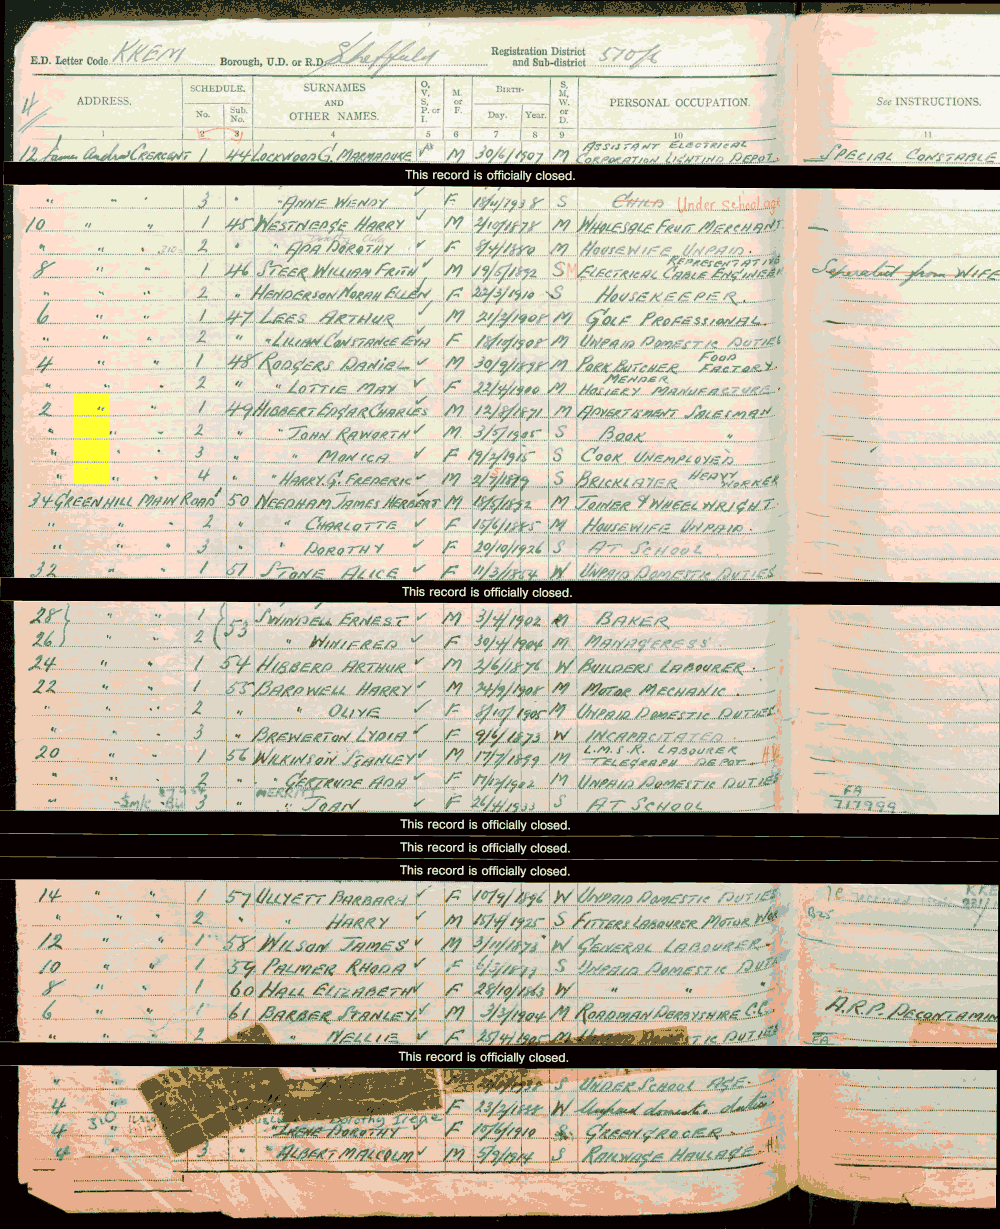 1939 census returns for Edger Charles Hibbert and Monica Hibbert